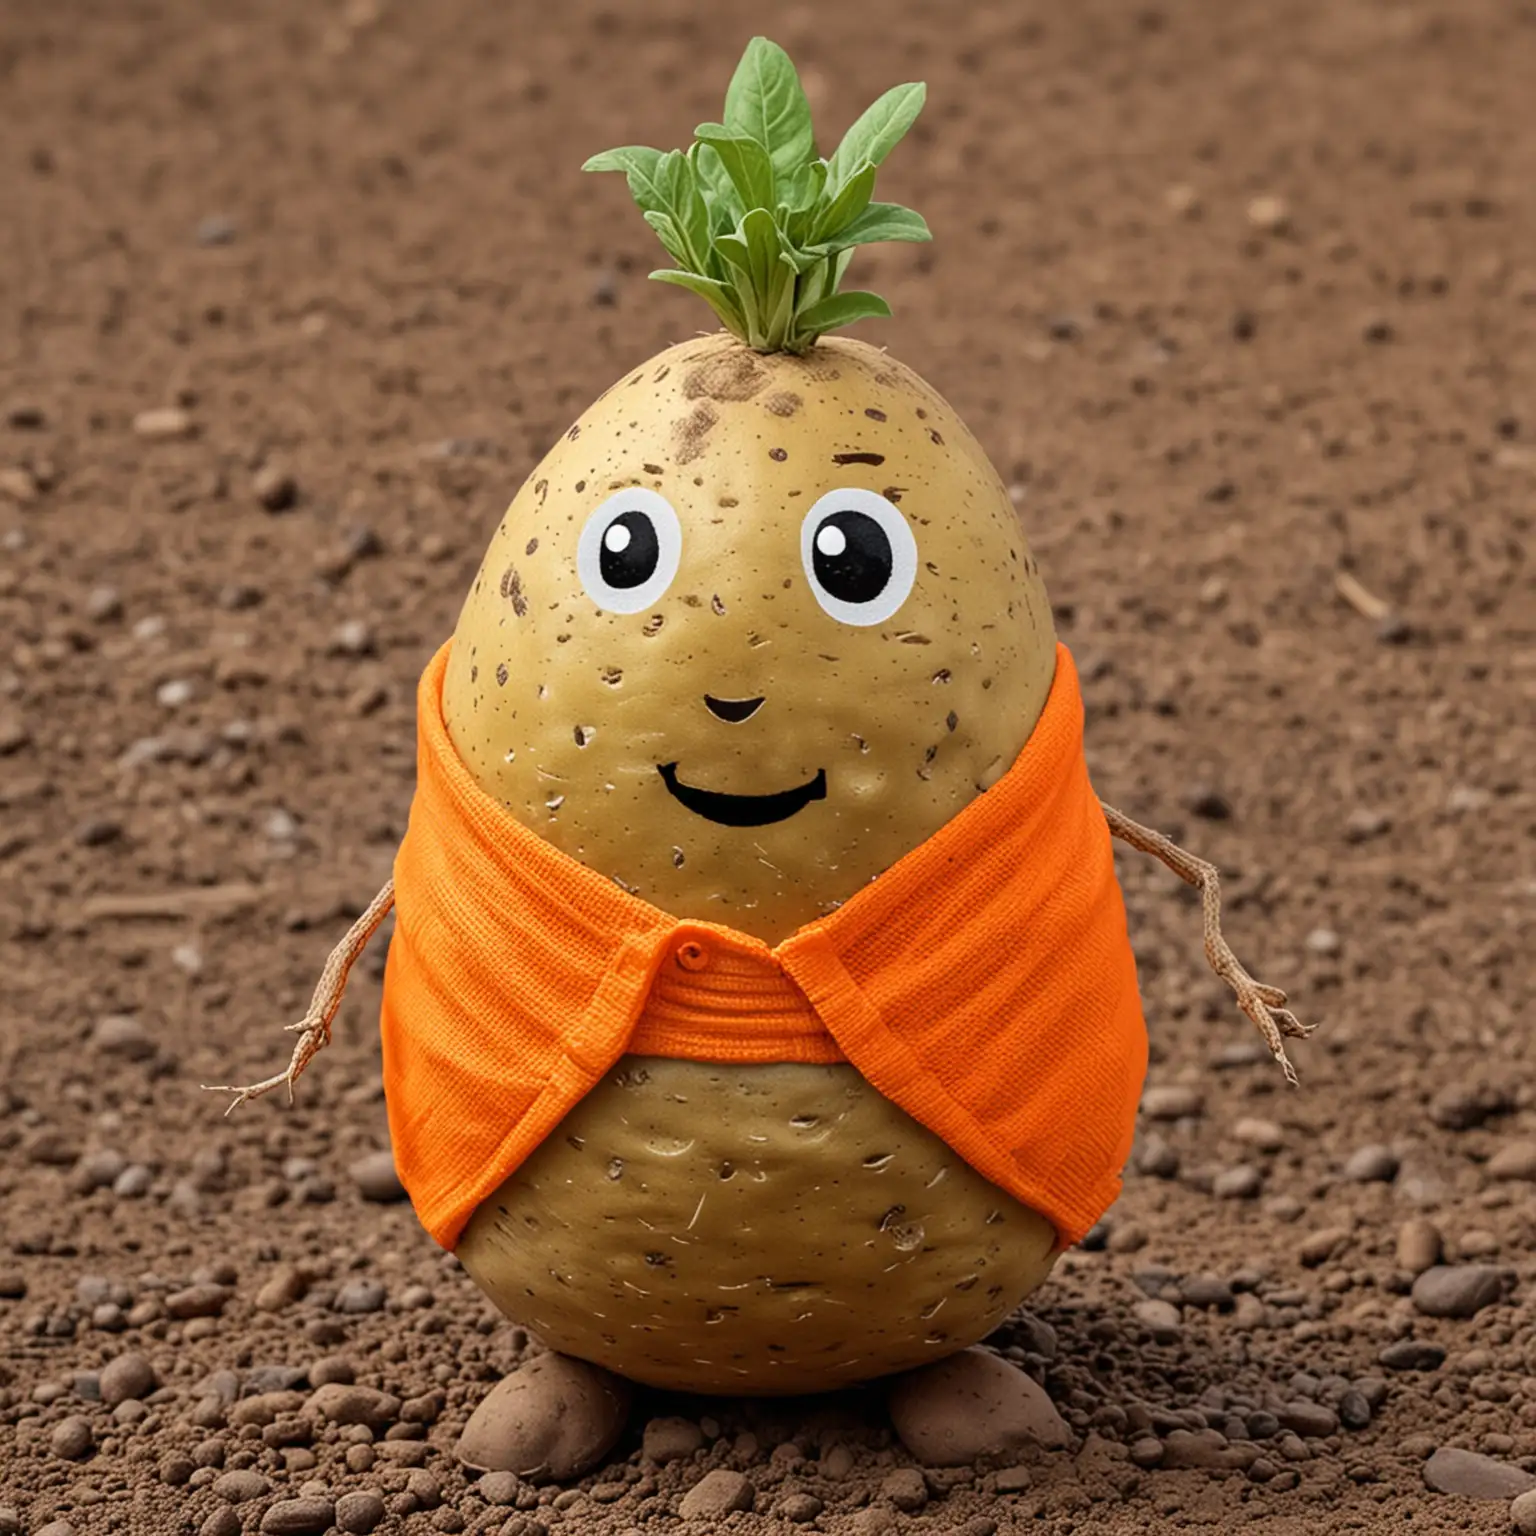 Russet Potato Wearing an Orange Vest